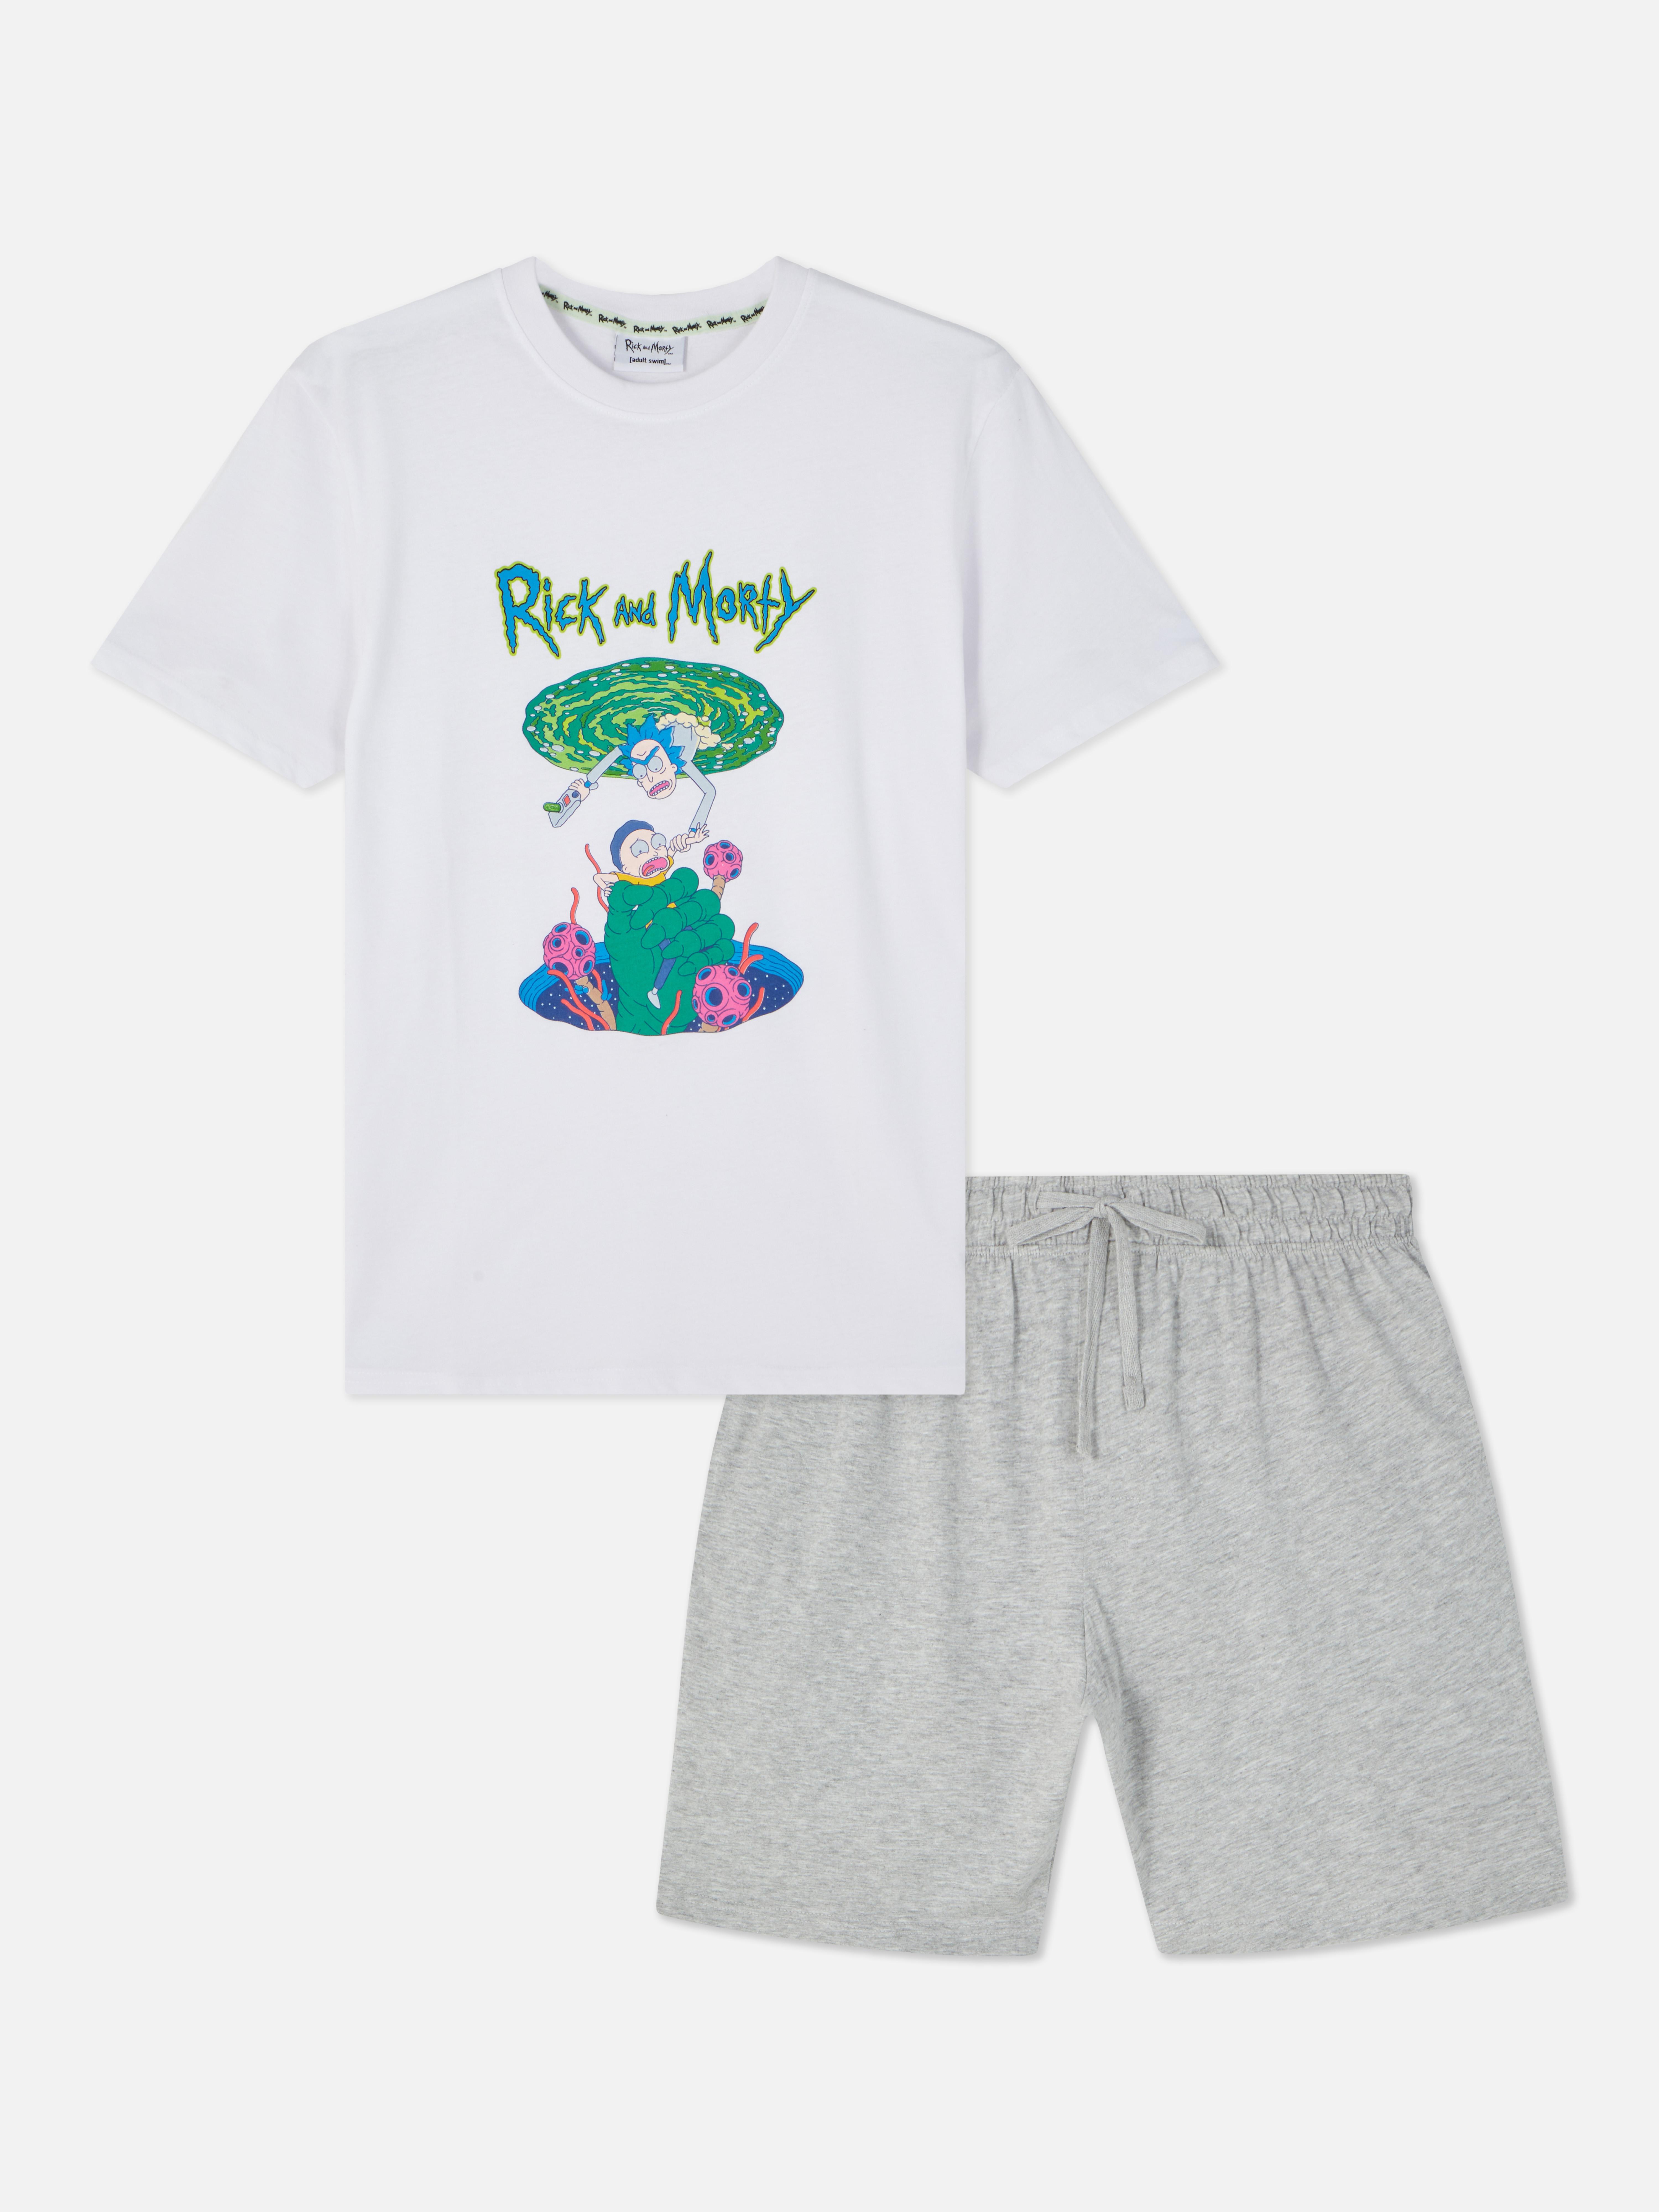 Primark pajama shorts